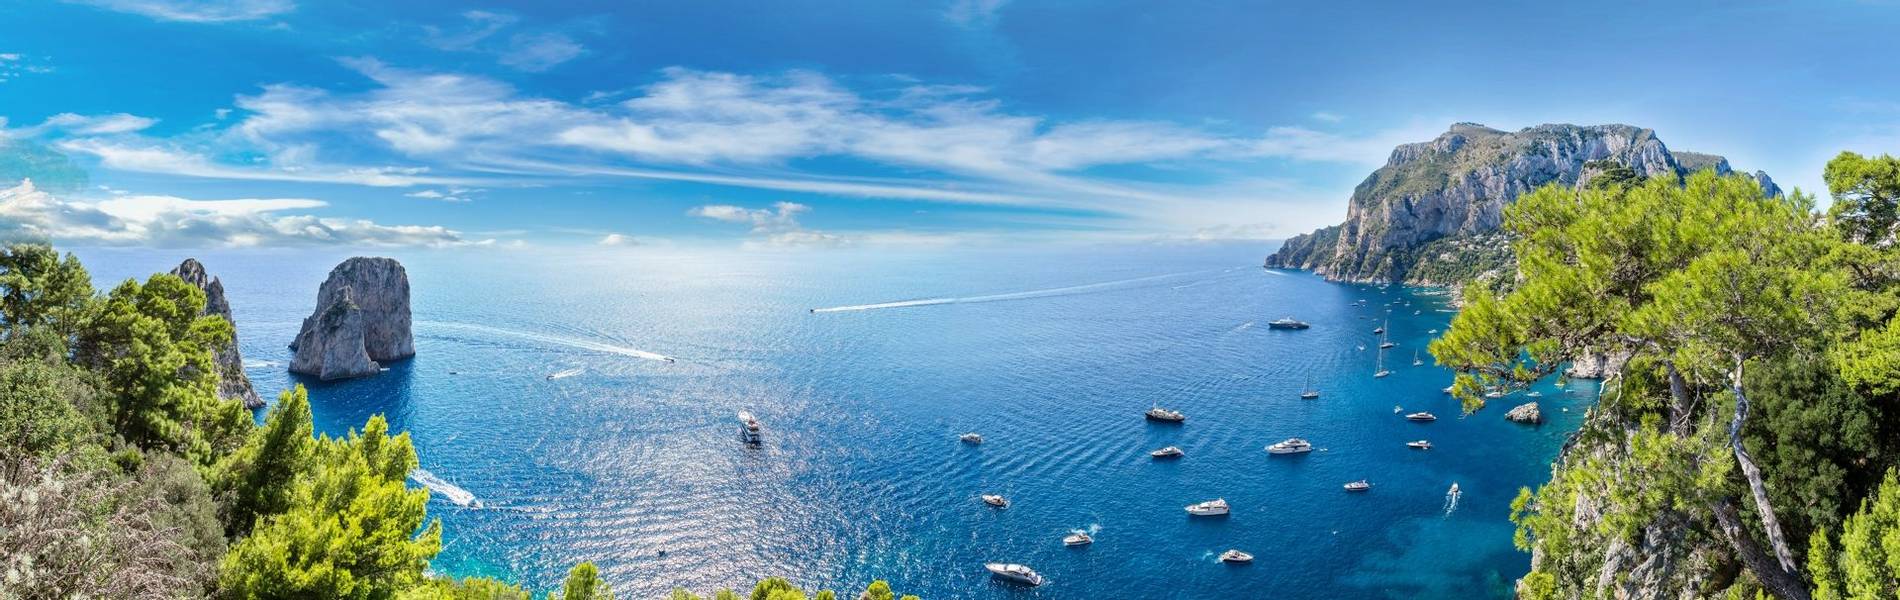 Capri Island, Italy.jpg